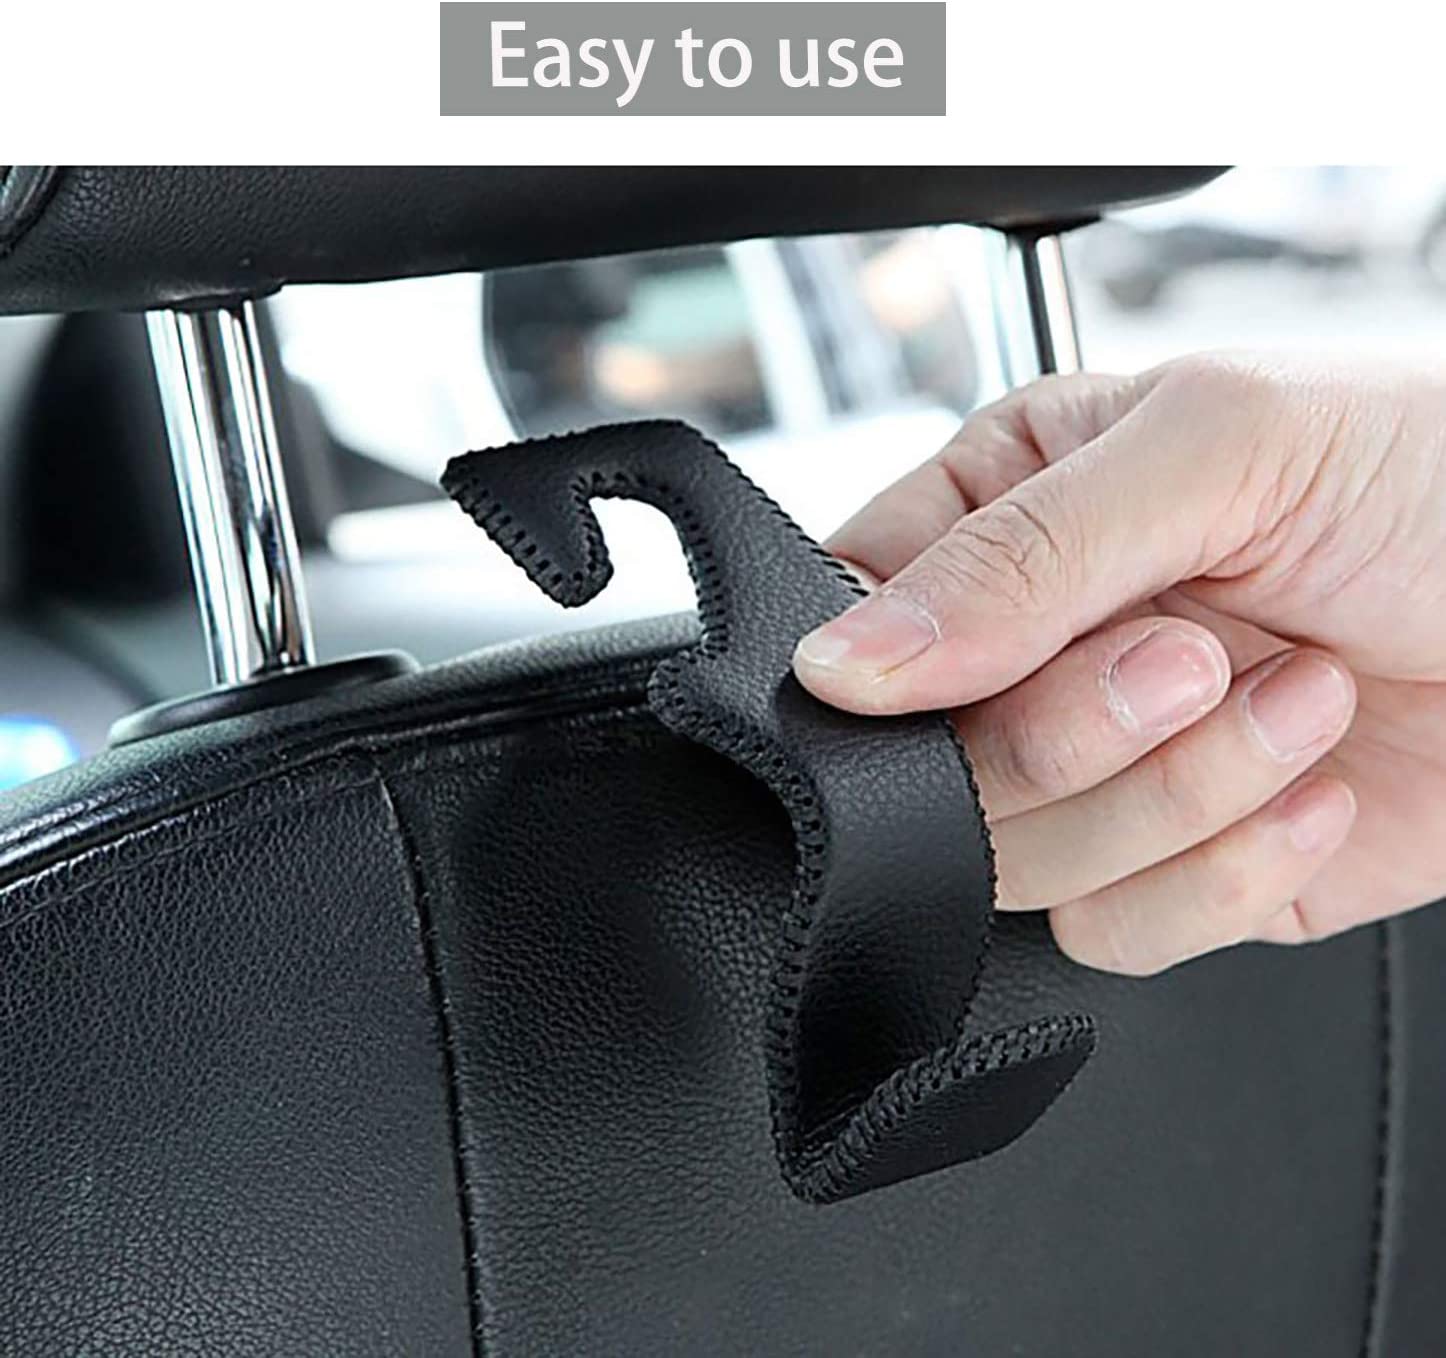 Amooca Universal Car Vehicle Seat Back Headrest Hooks, Hanger Holder Hook  for Bag Purse Handbag Cloth Grocery, S Type Back Seat Organizer Hanger